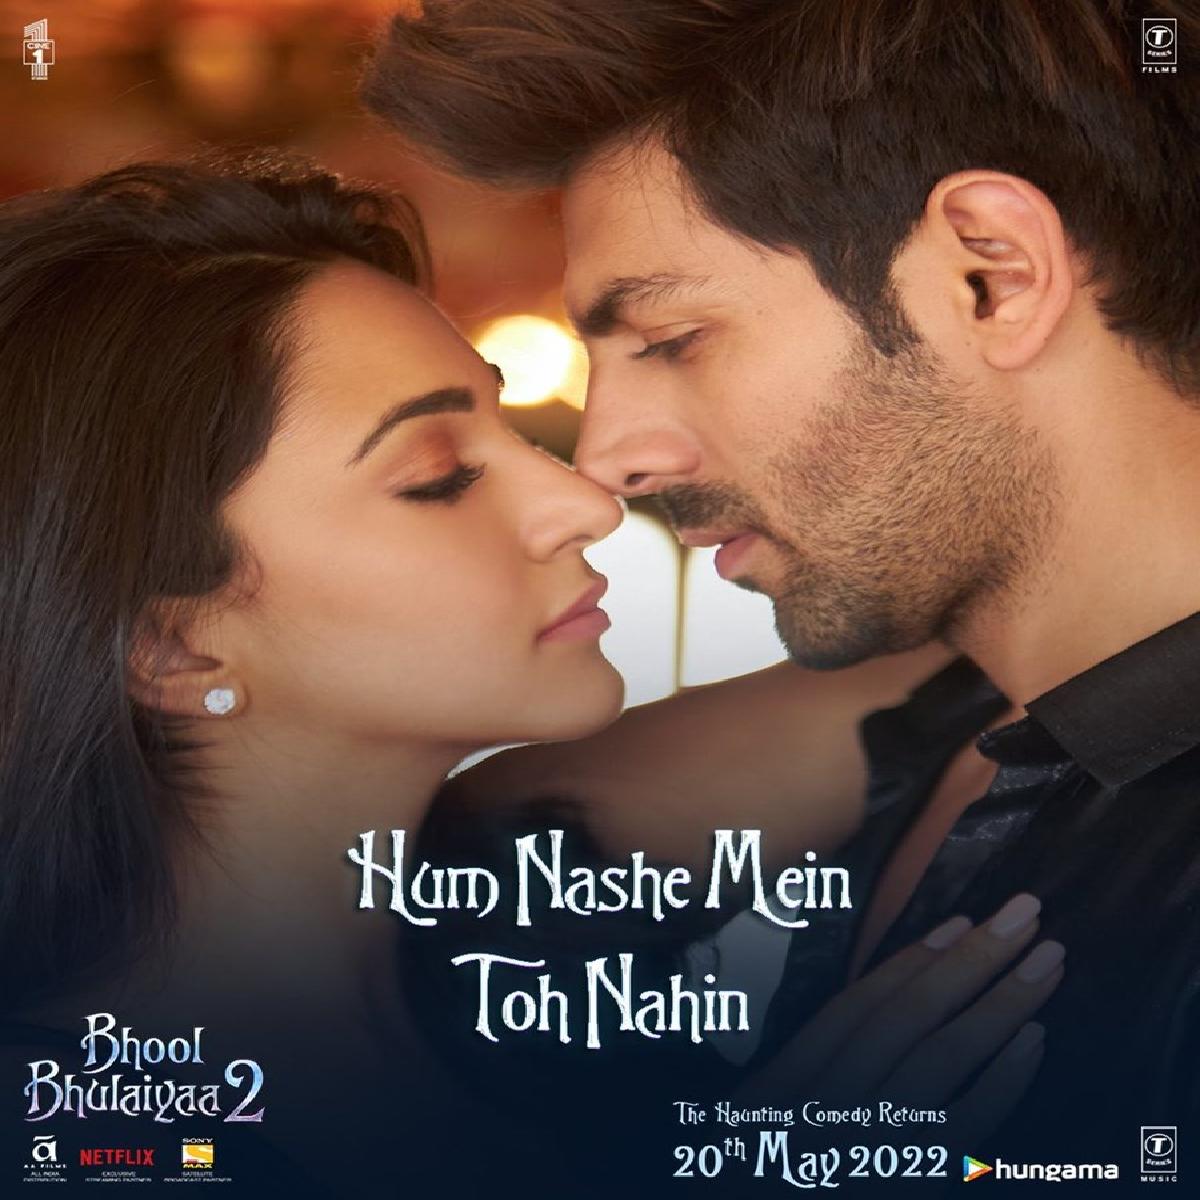 Hum Nashe Mein Toh Nahin Teaser Out, Feat. Kartik Aaryan And Kiara Advani